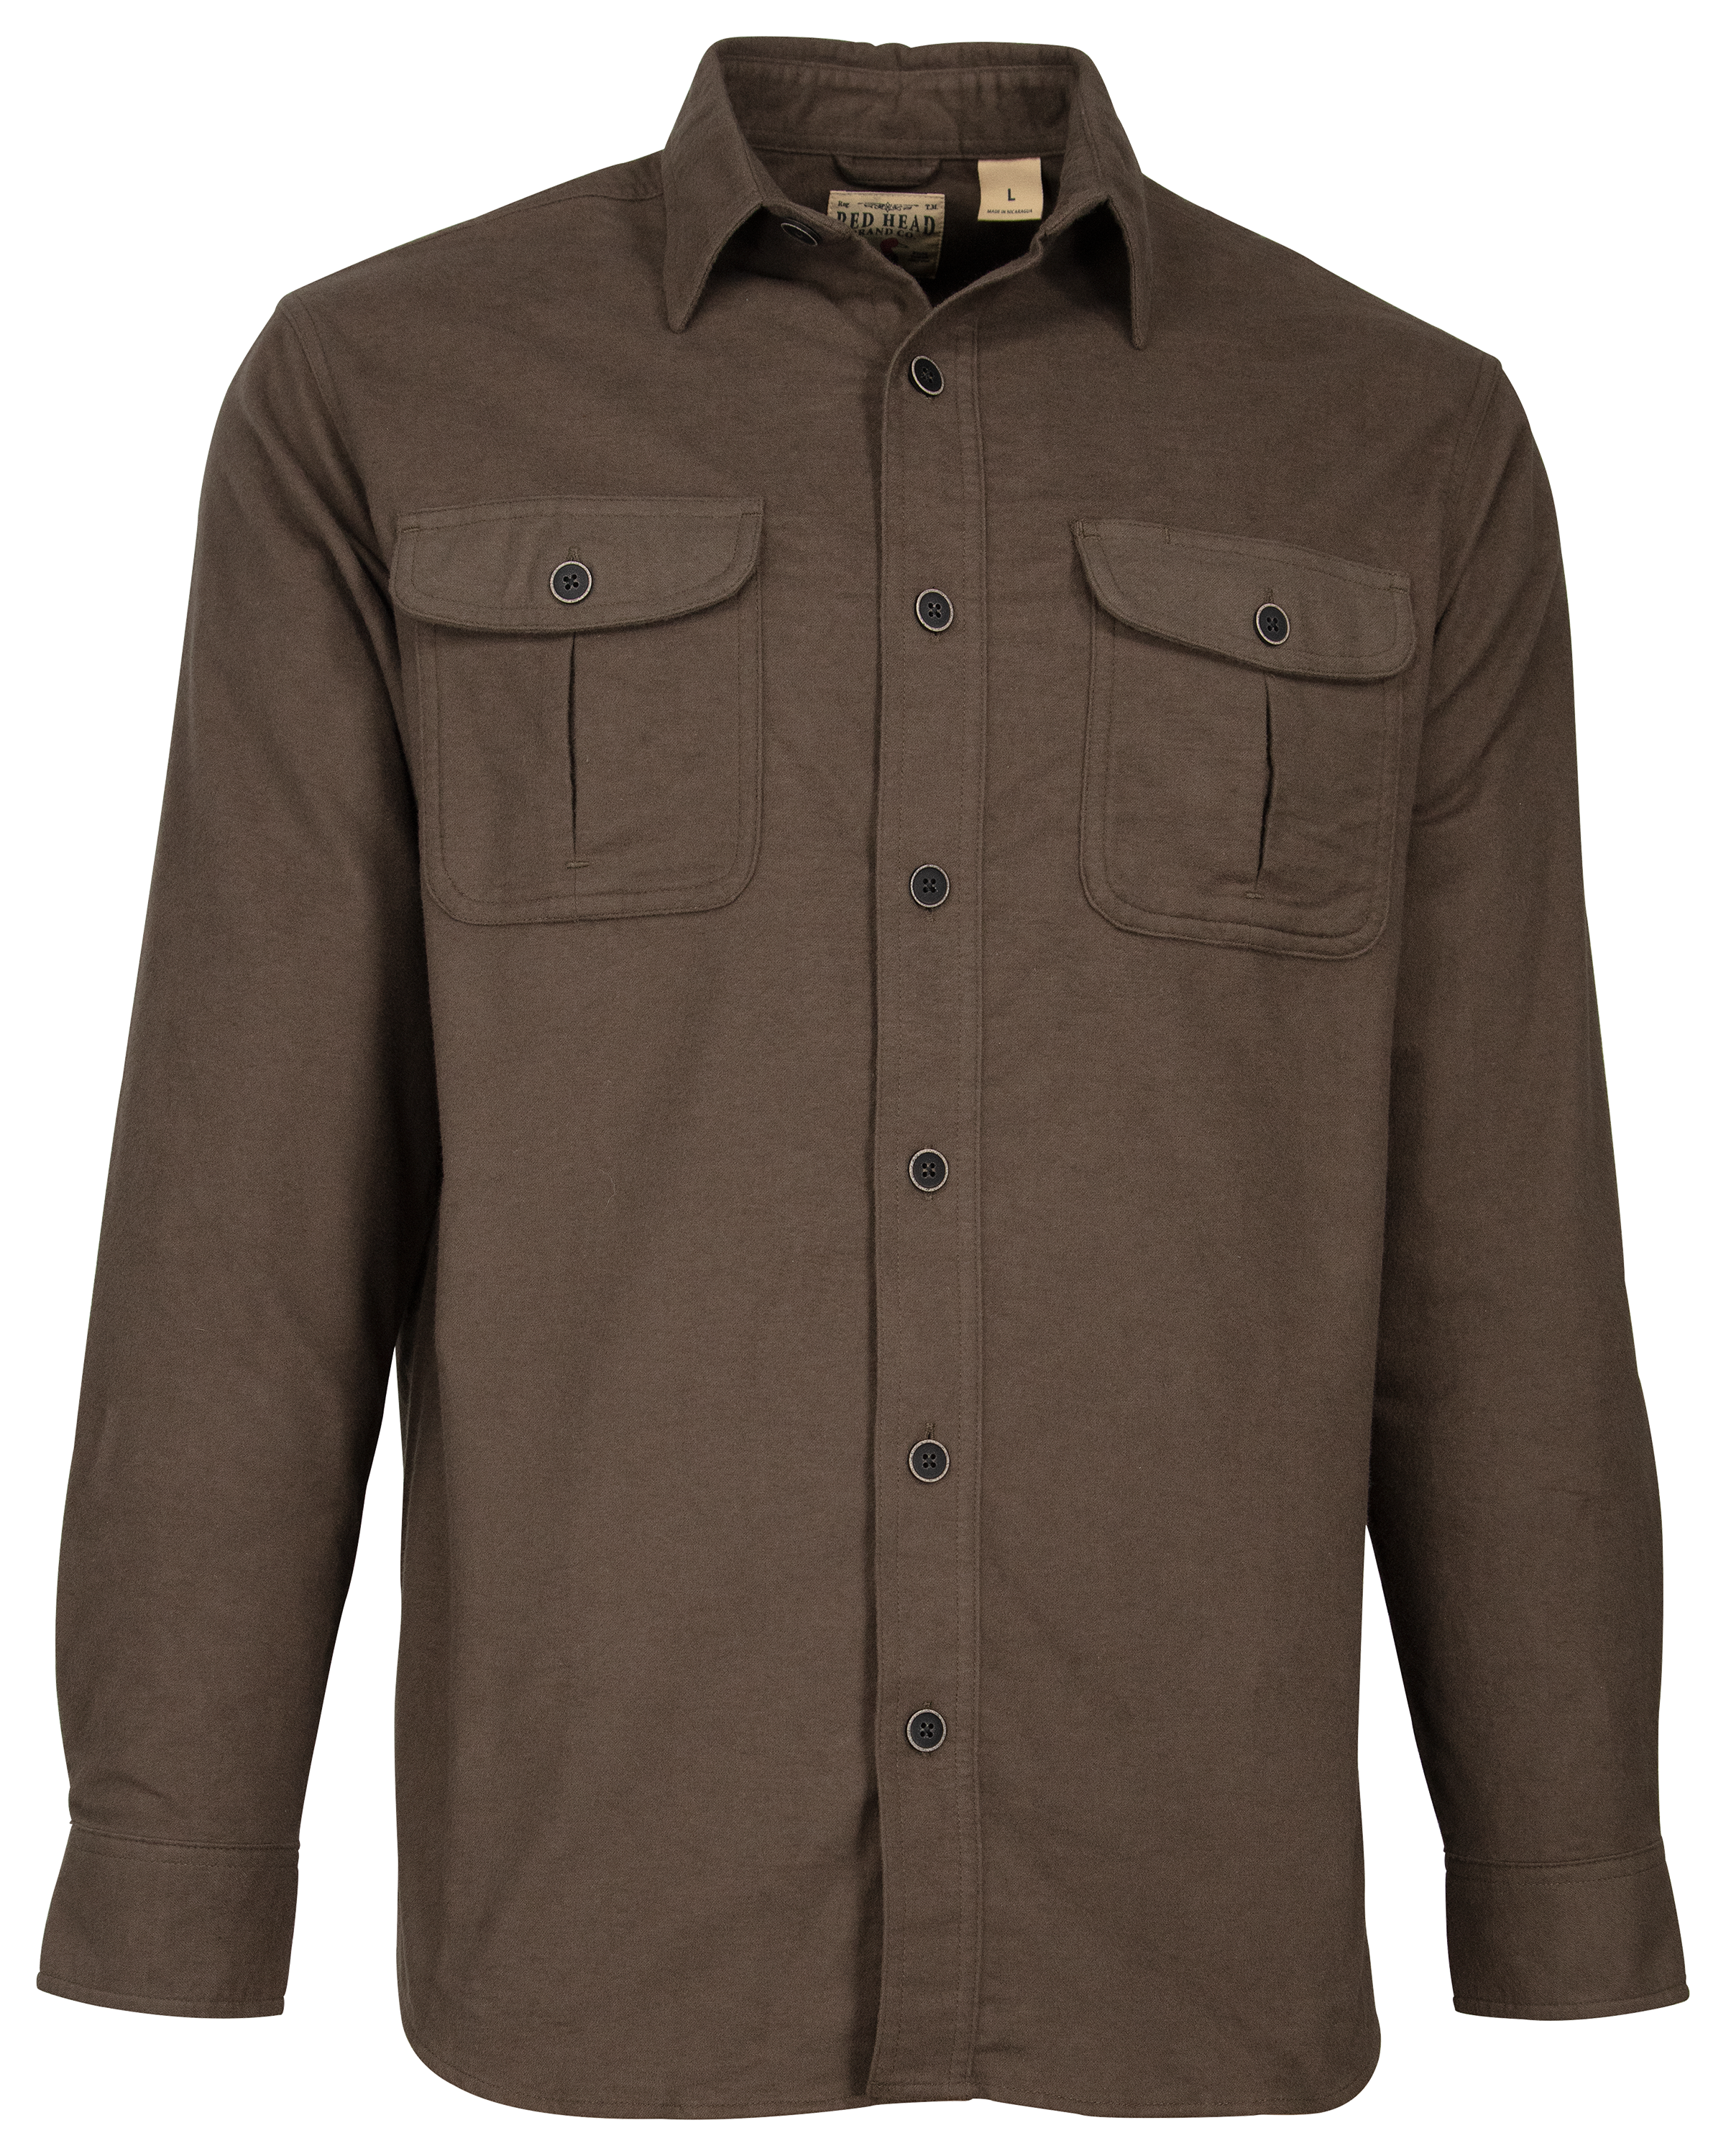 RedHead Chamois Long-Sleeve Shirt for Men | Cabela's